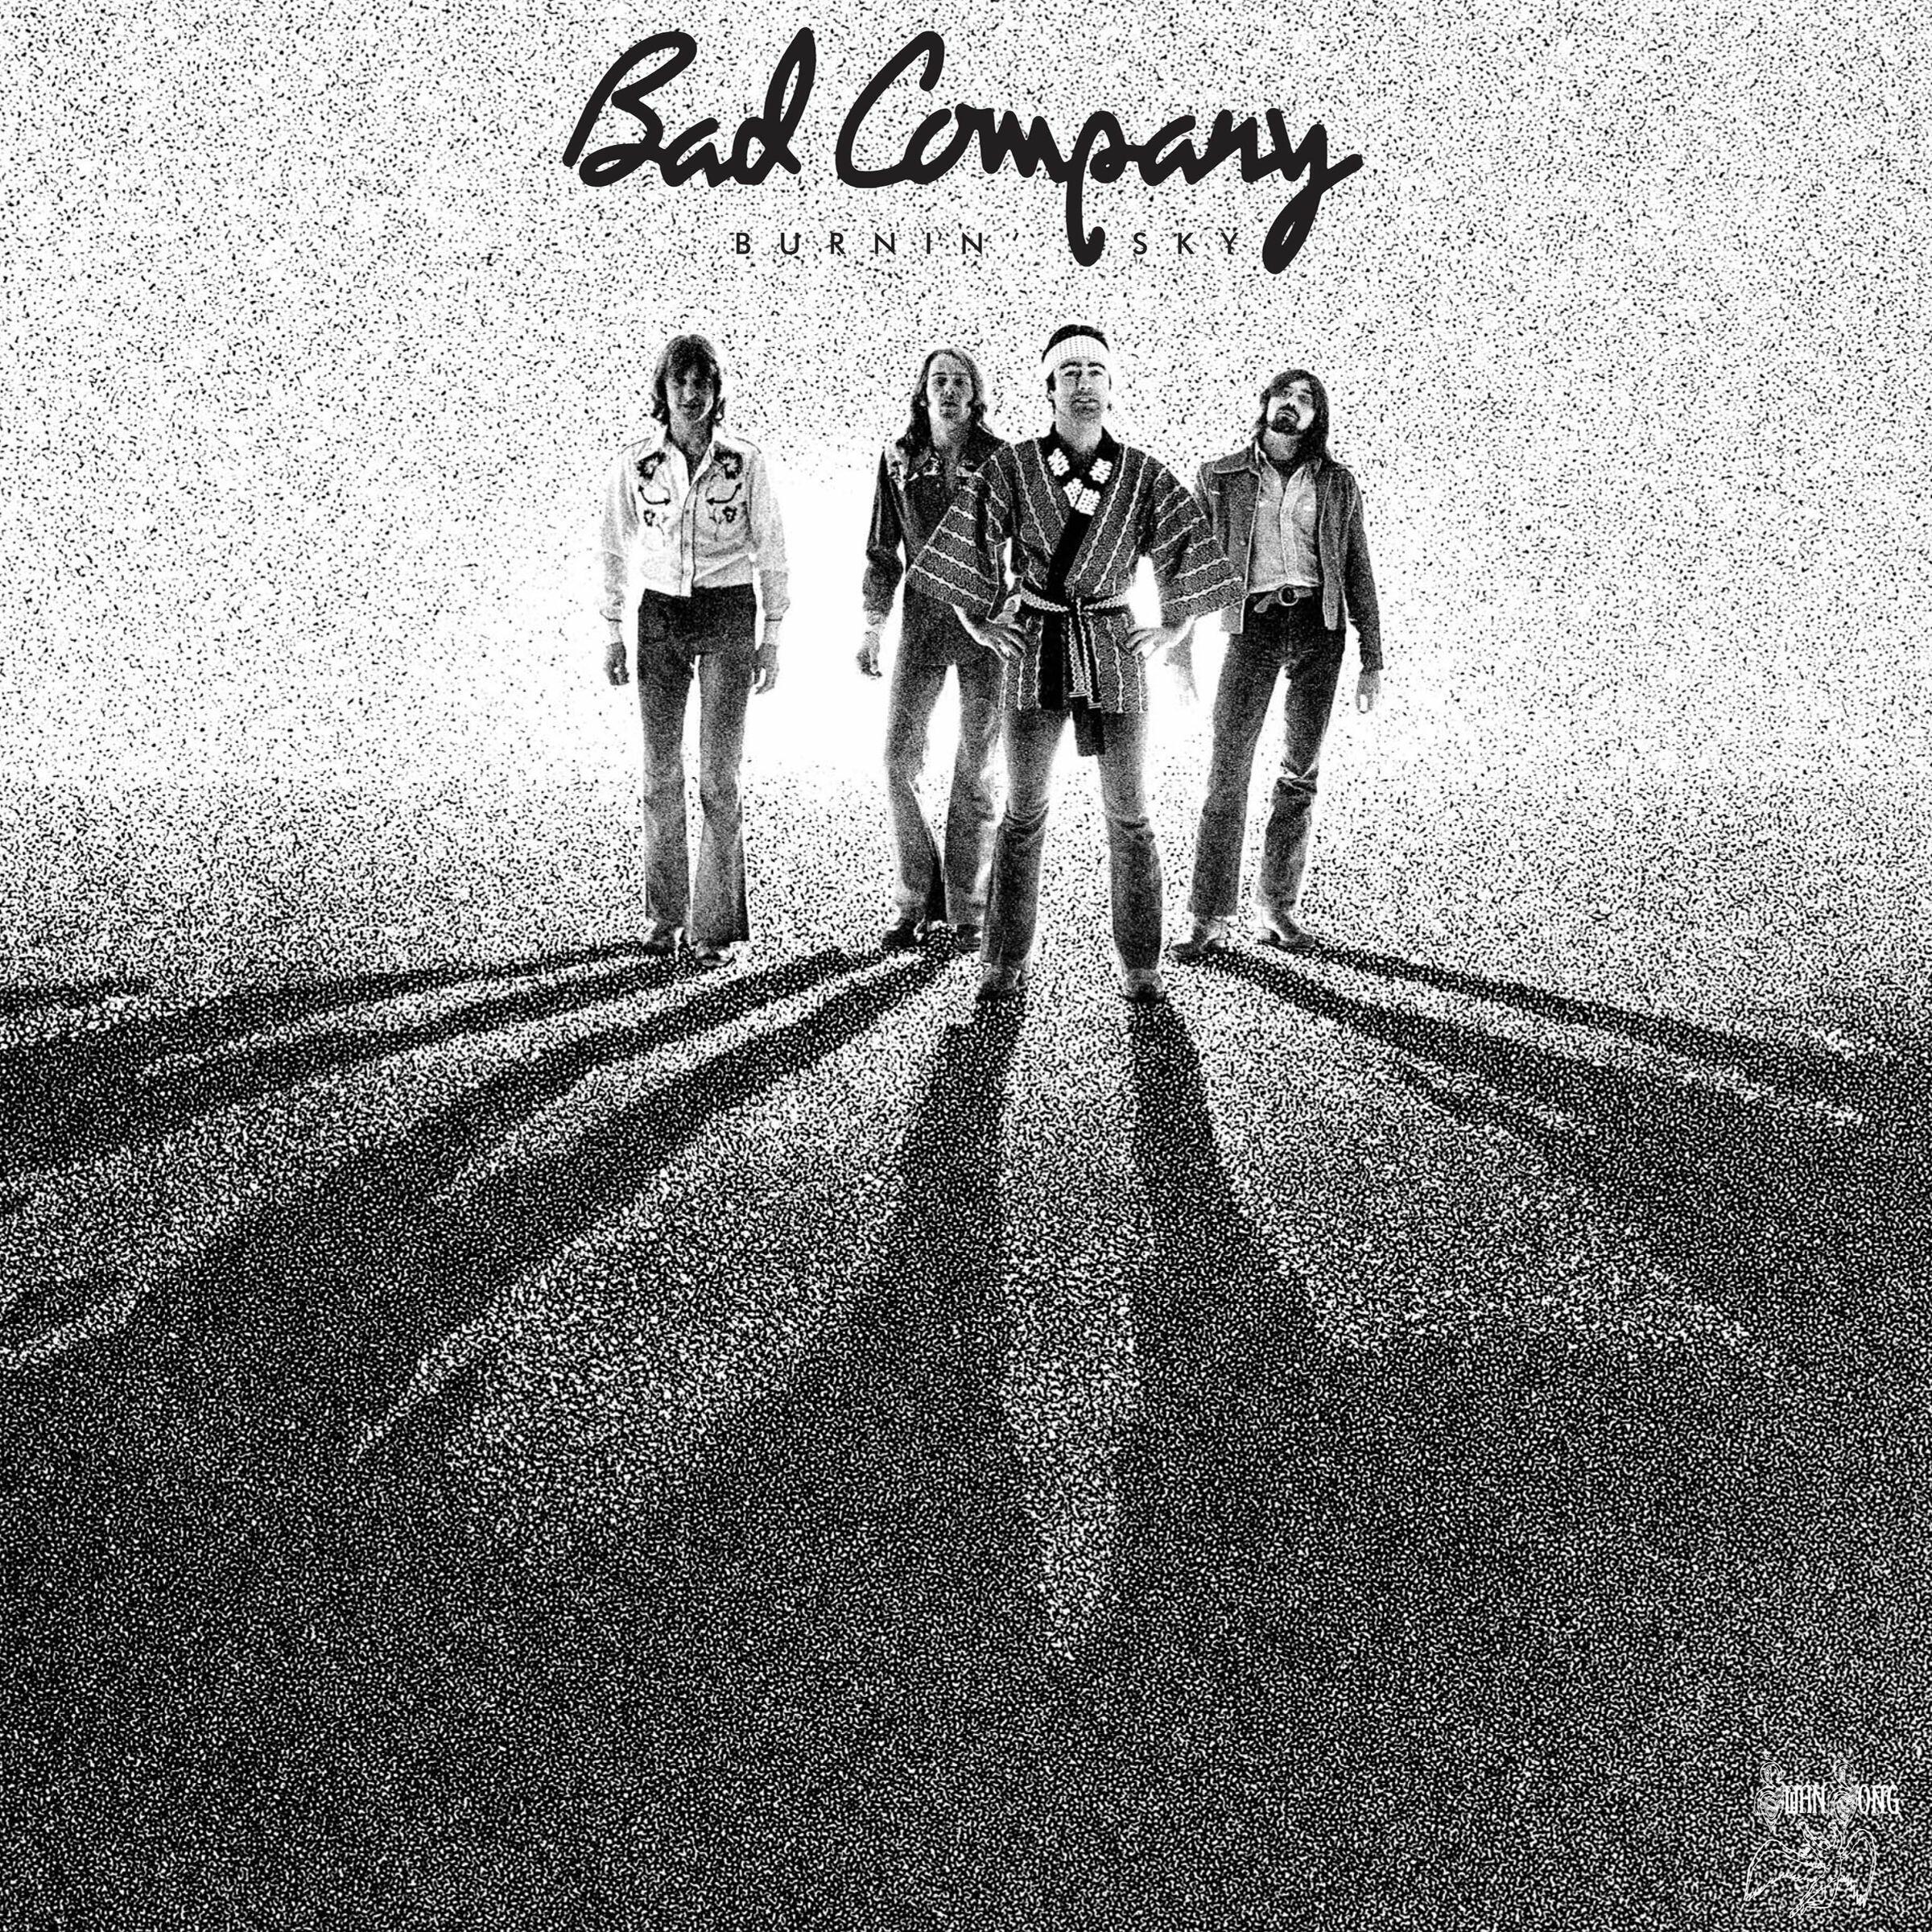 Listen Free To Bad Company Burnin Sky Radio On Iheartradio Iheartradio